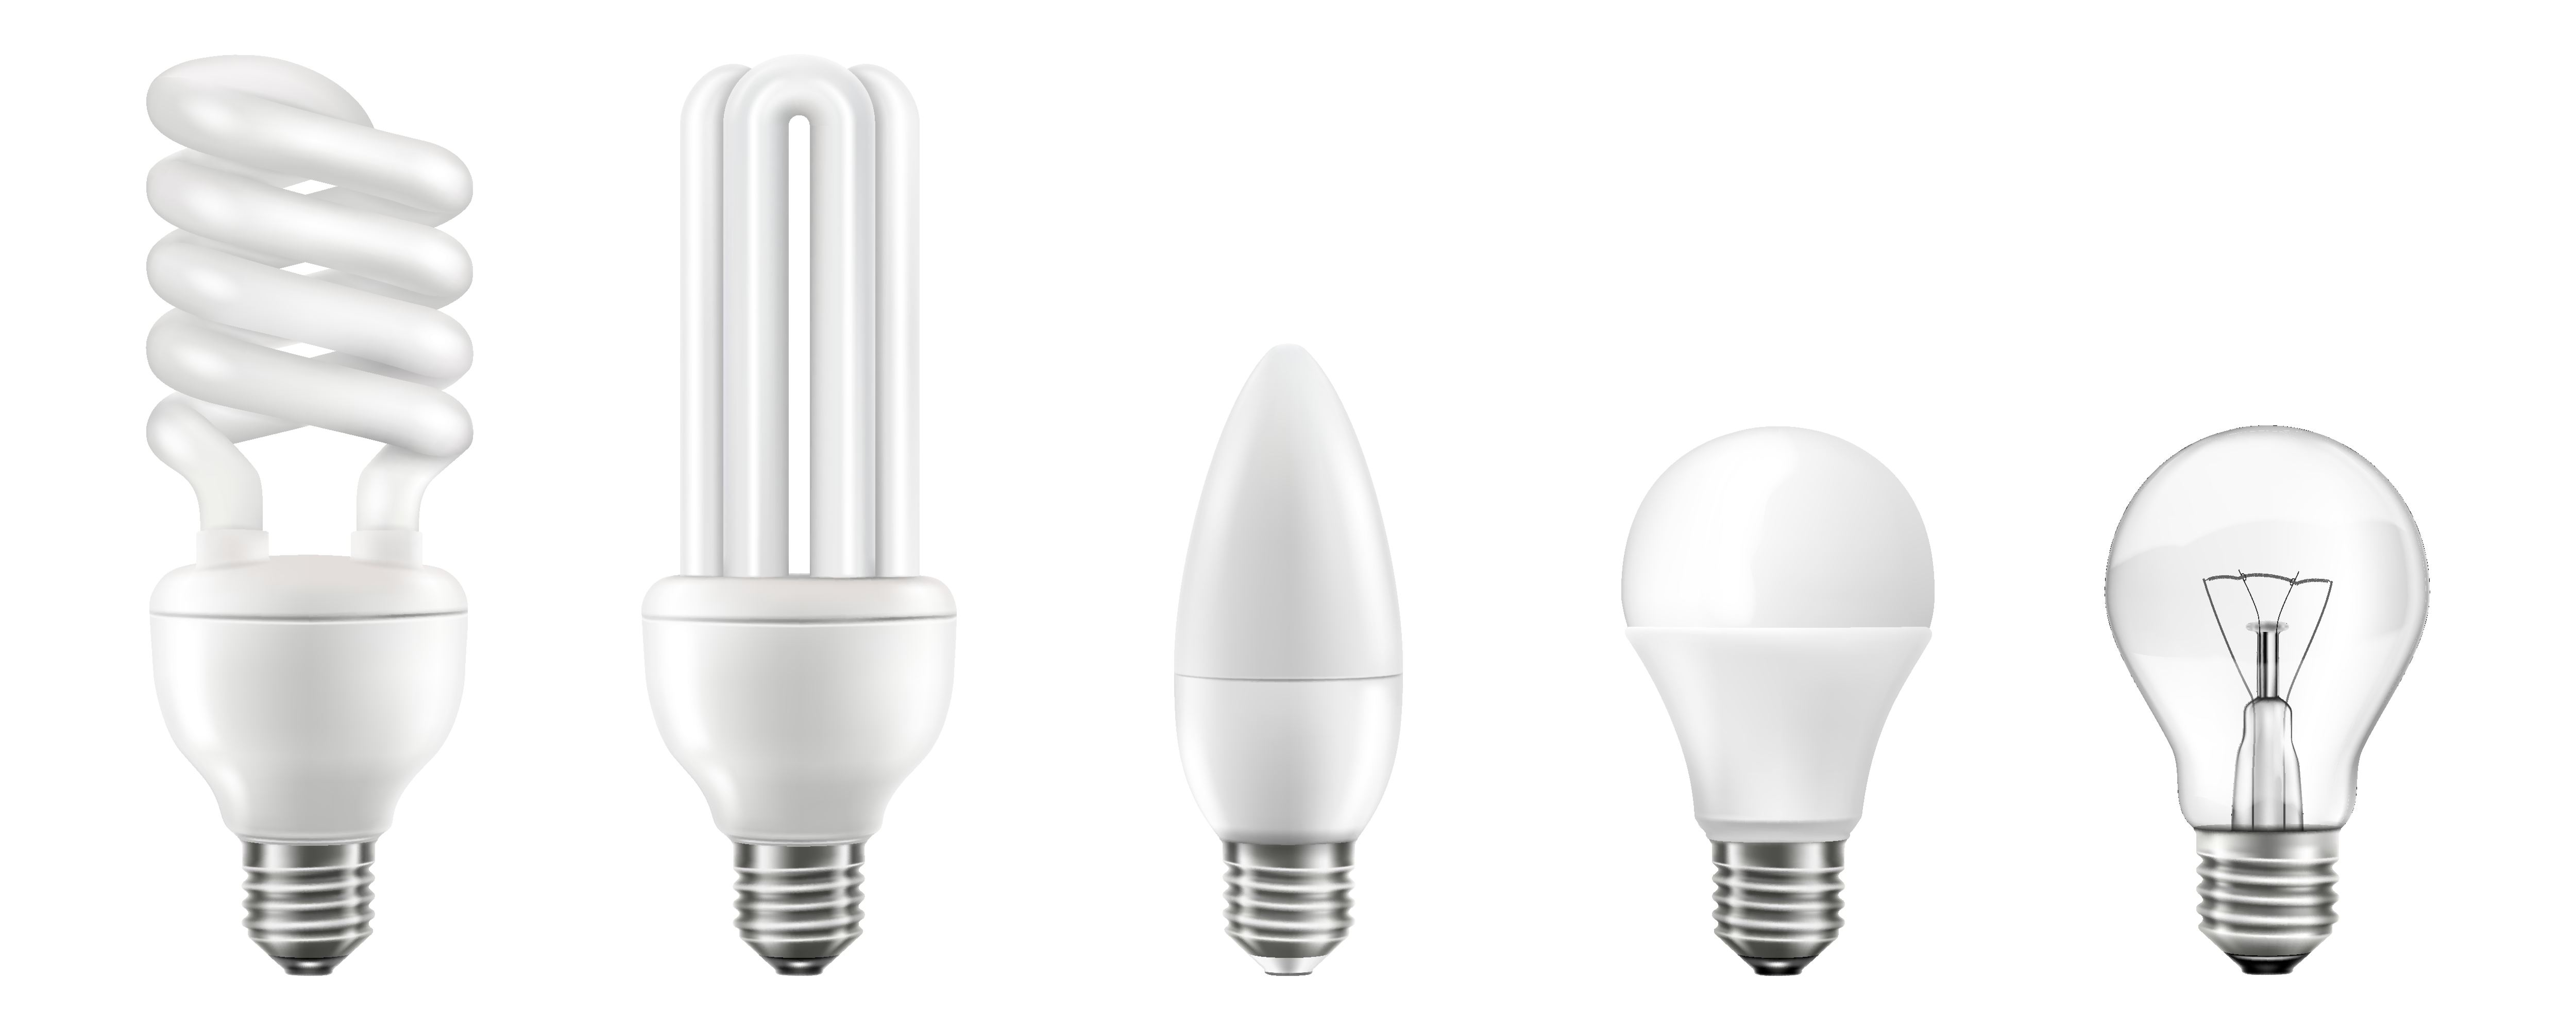 CFL and LED light bulbs